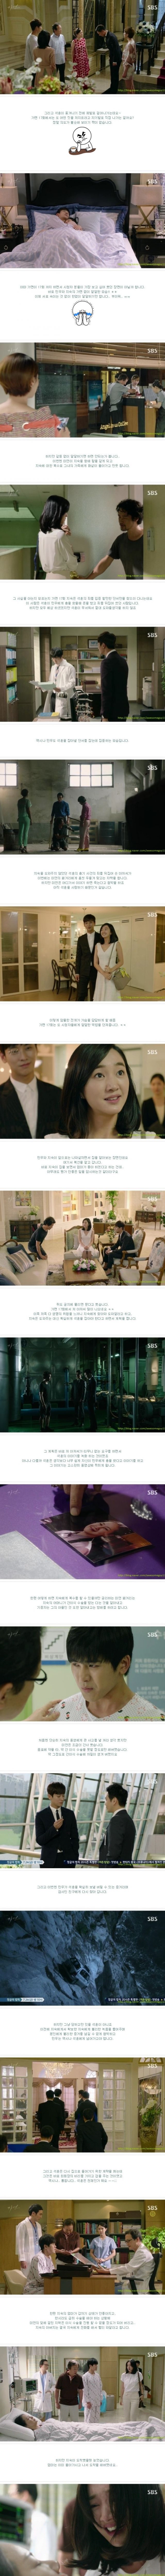 episode 17 captures for the Korean drama 'Mask'